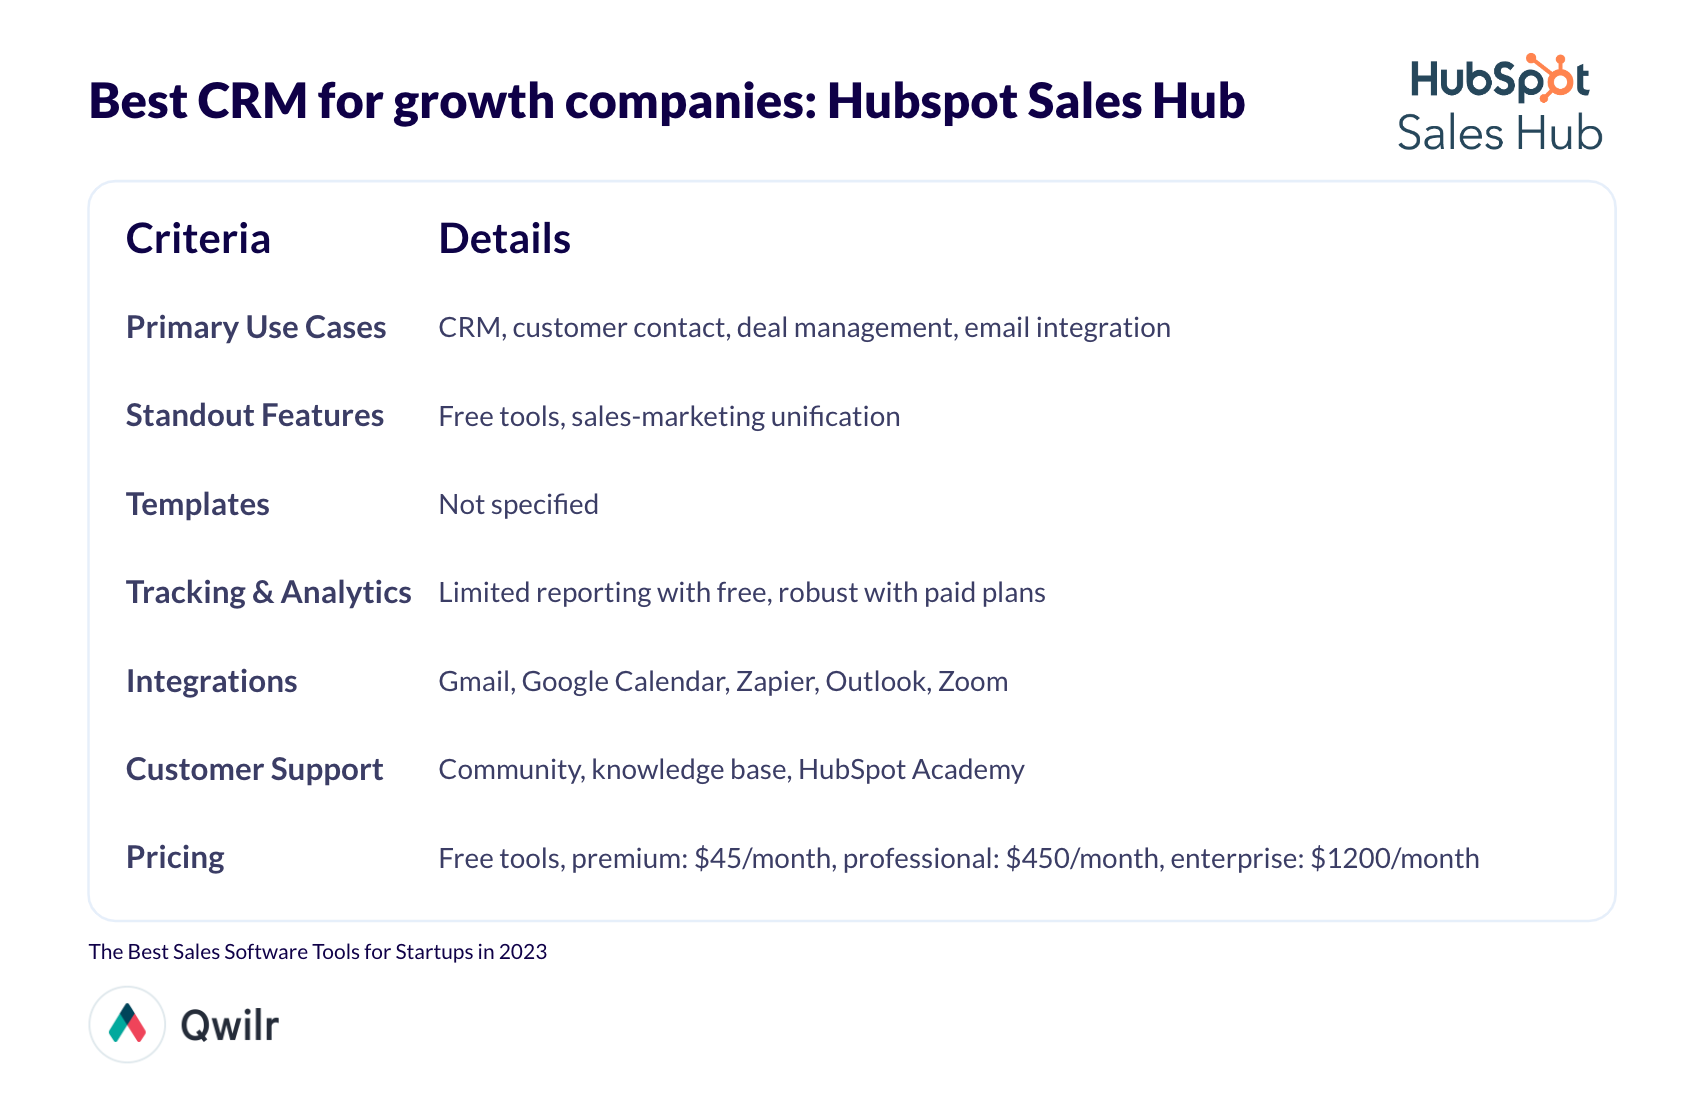 A table summarizing Hubspot Sales Hub's features